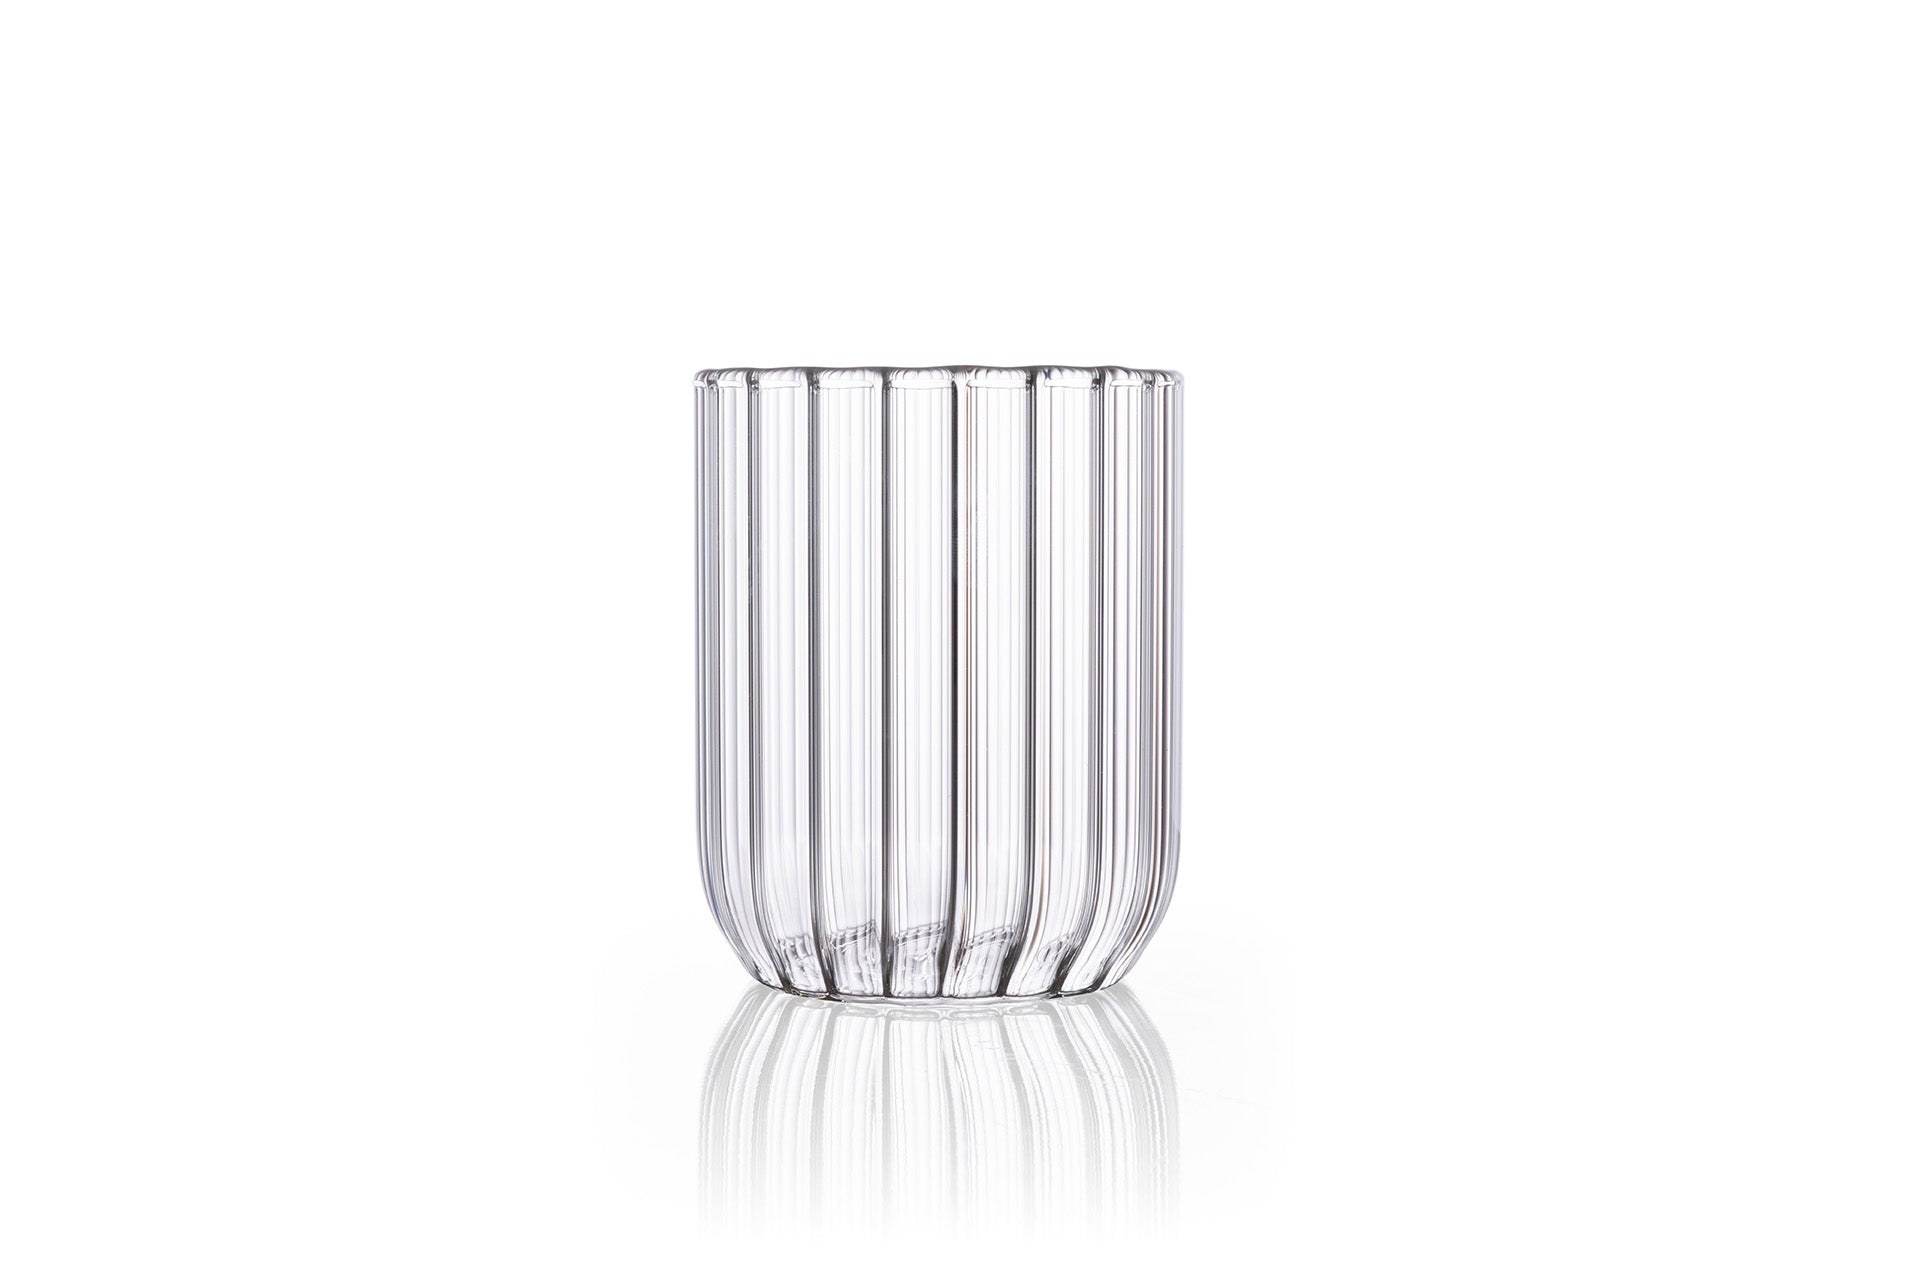 elysian collective dearborn fluted czech tumbler glassware designed by felicia ferrone